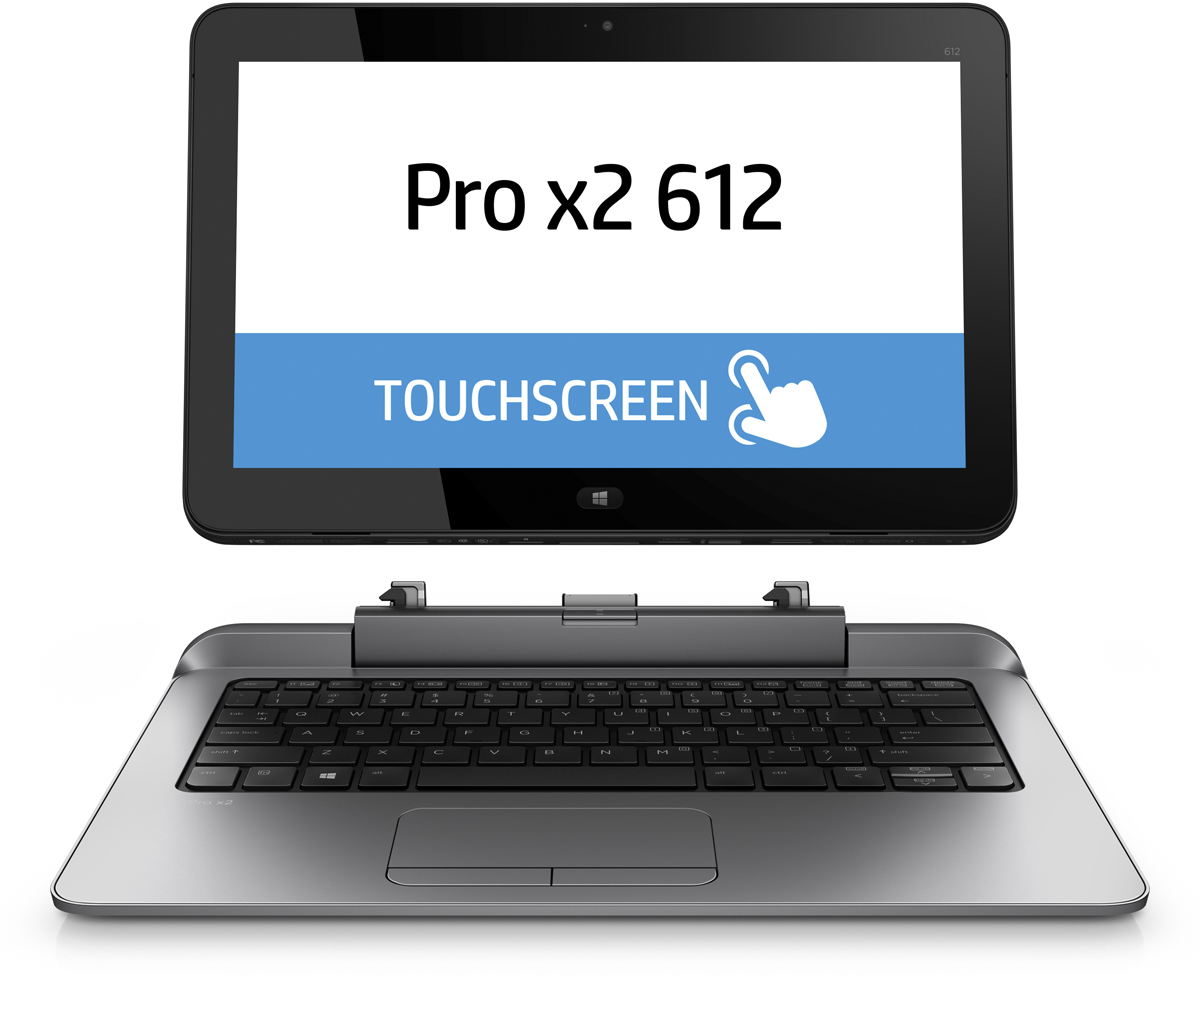 HP Pro x2 612 G1 (L5G67EA)